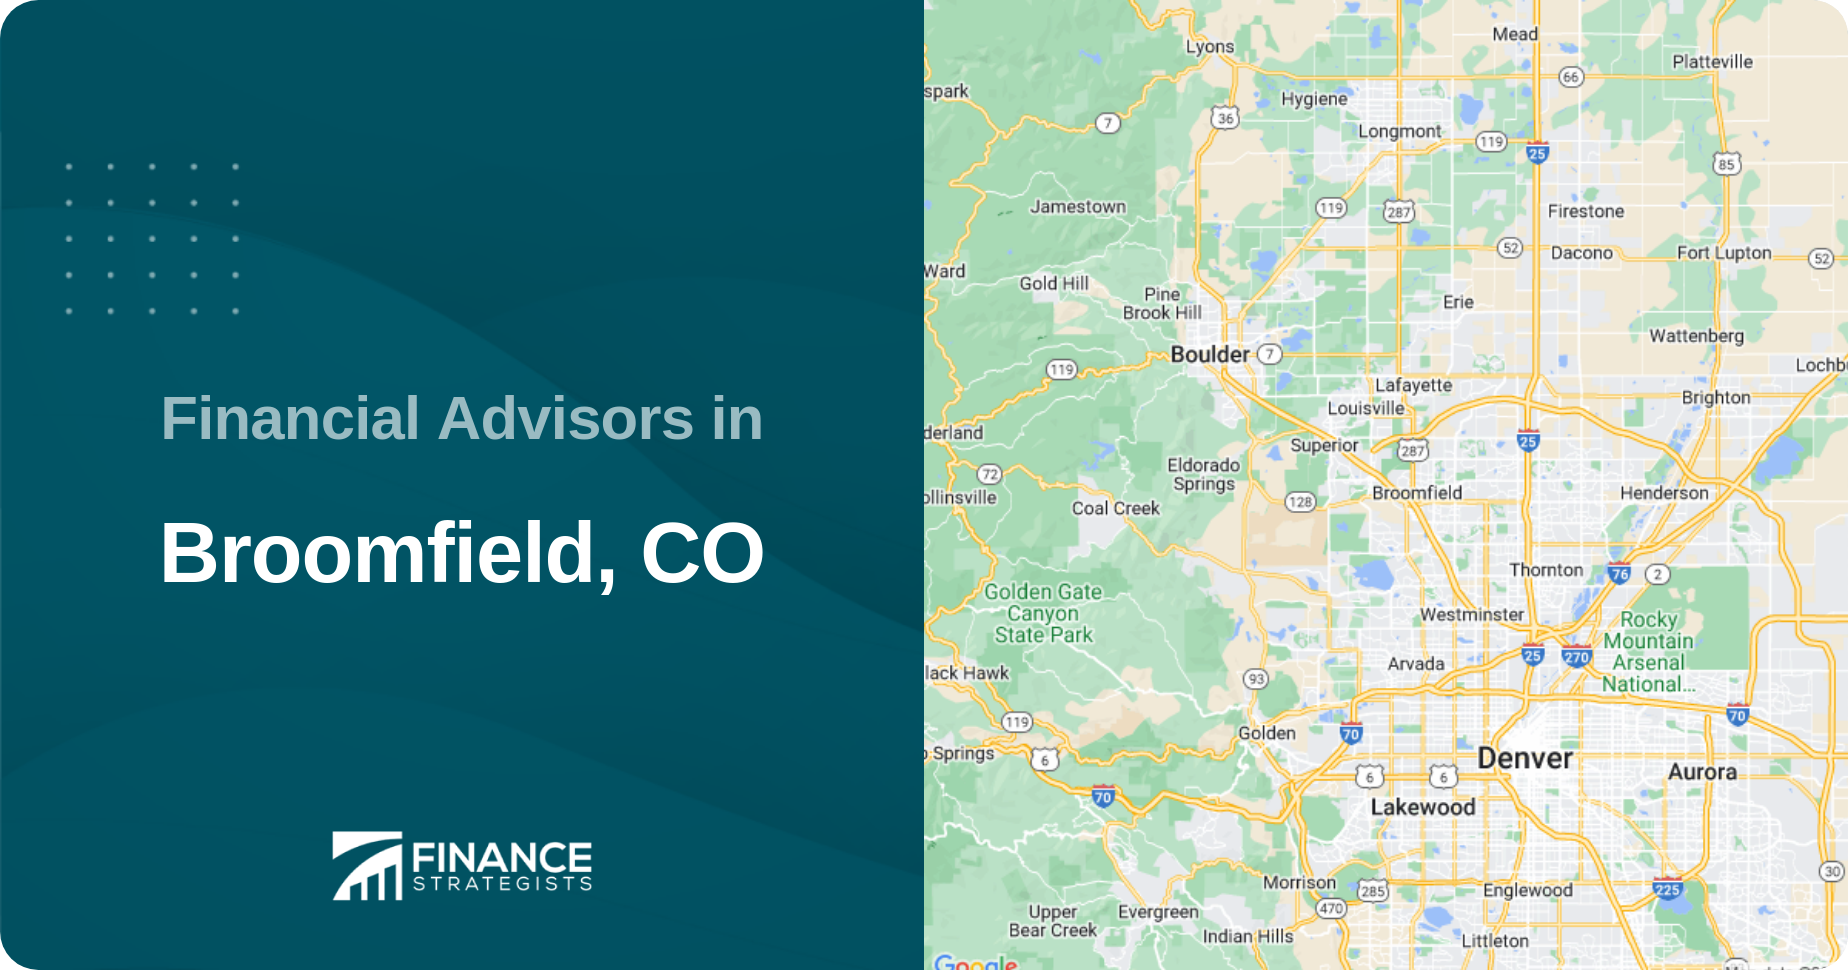 Financial Advisors in Broomfield, CO